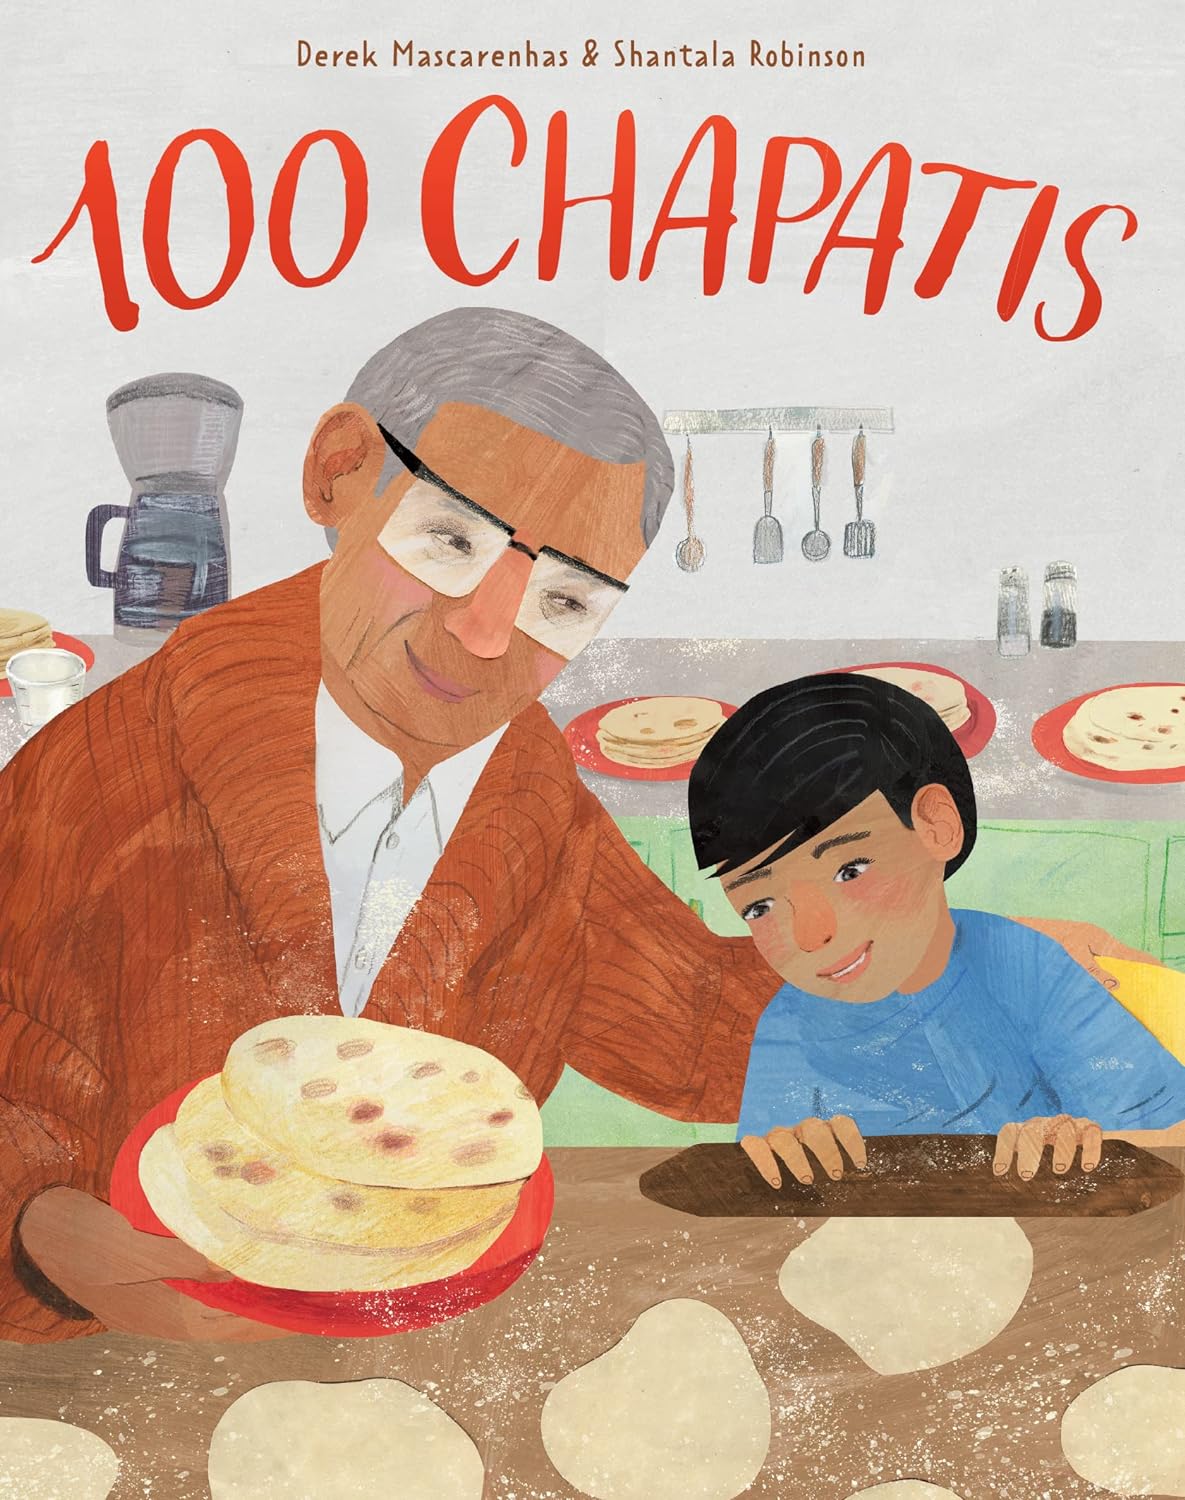 100 Chapatis (Derek Mascarenhas, Shantala Robinson)